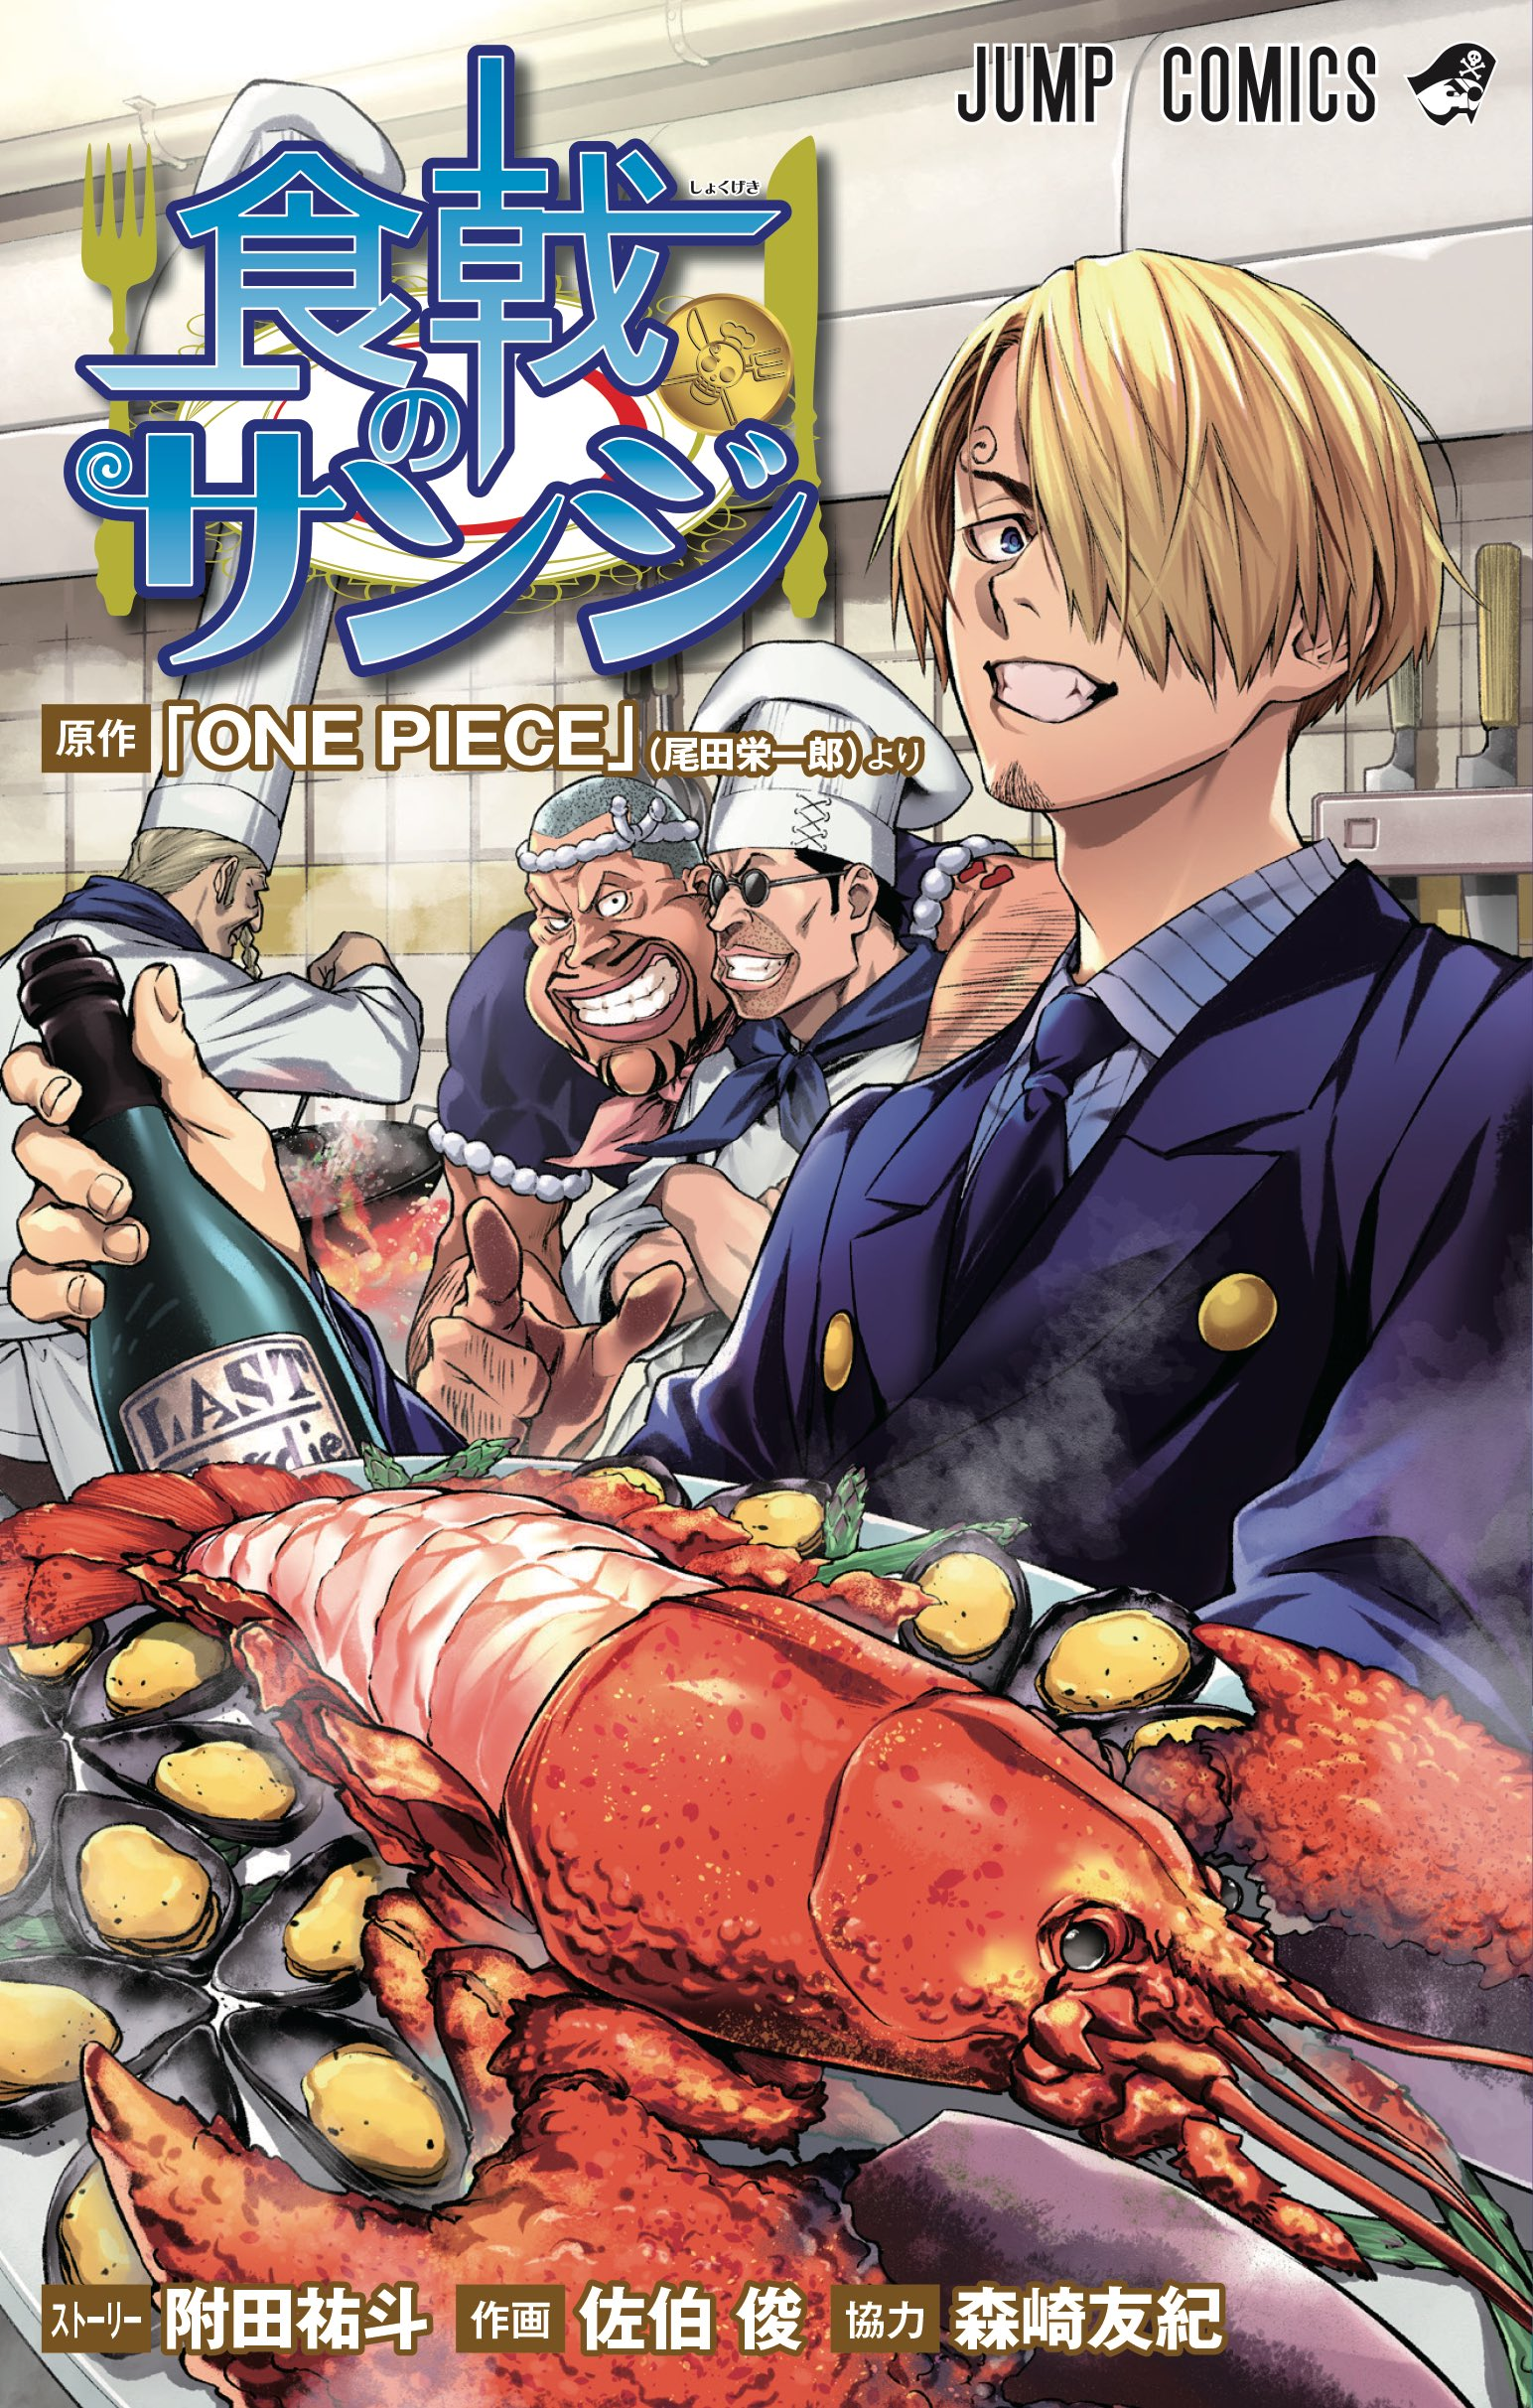 Food Wars!: Shokugeki no Soma, Vol. 36